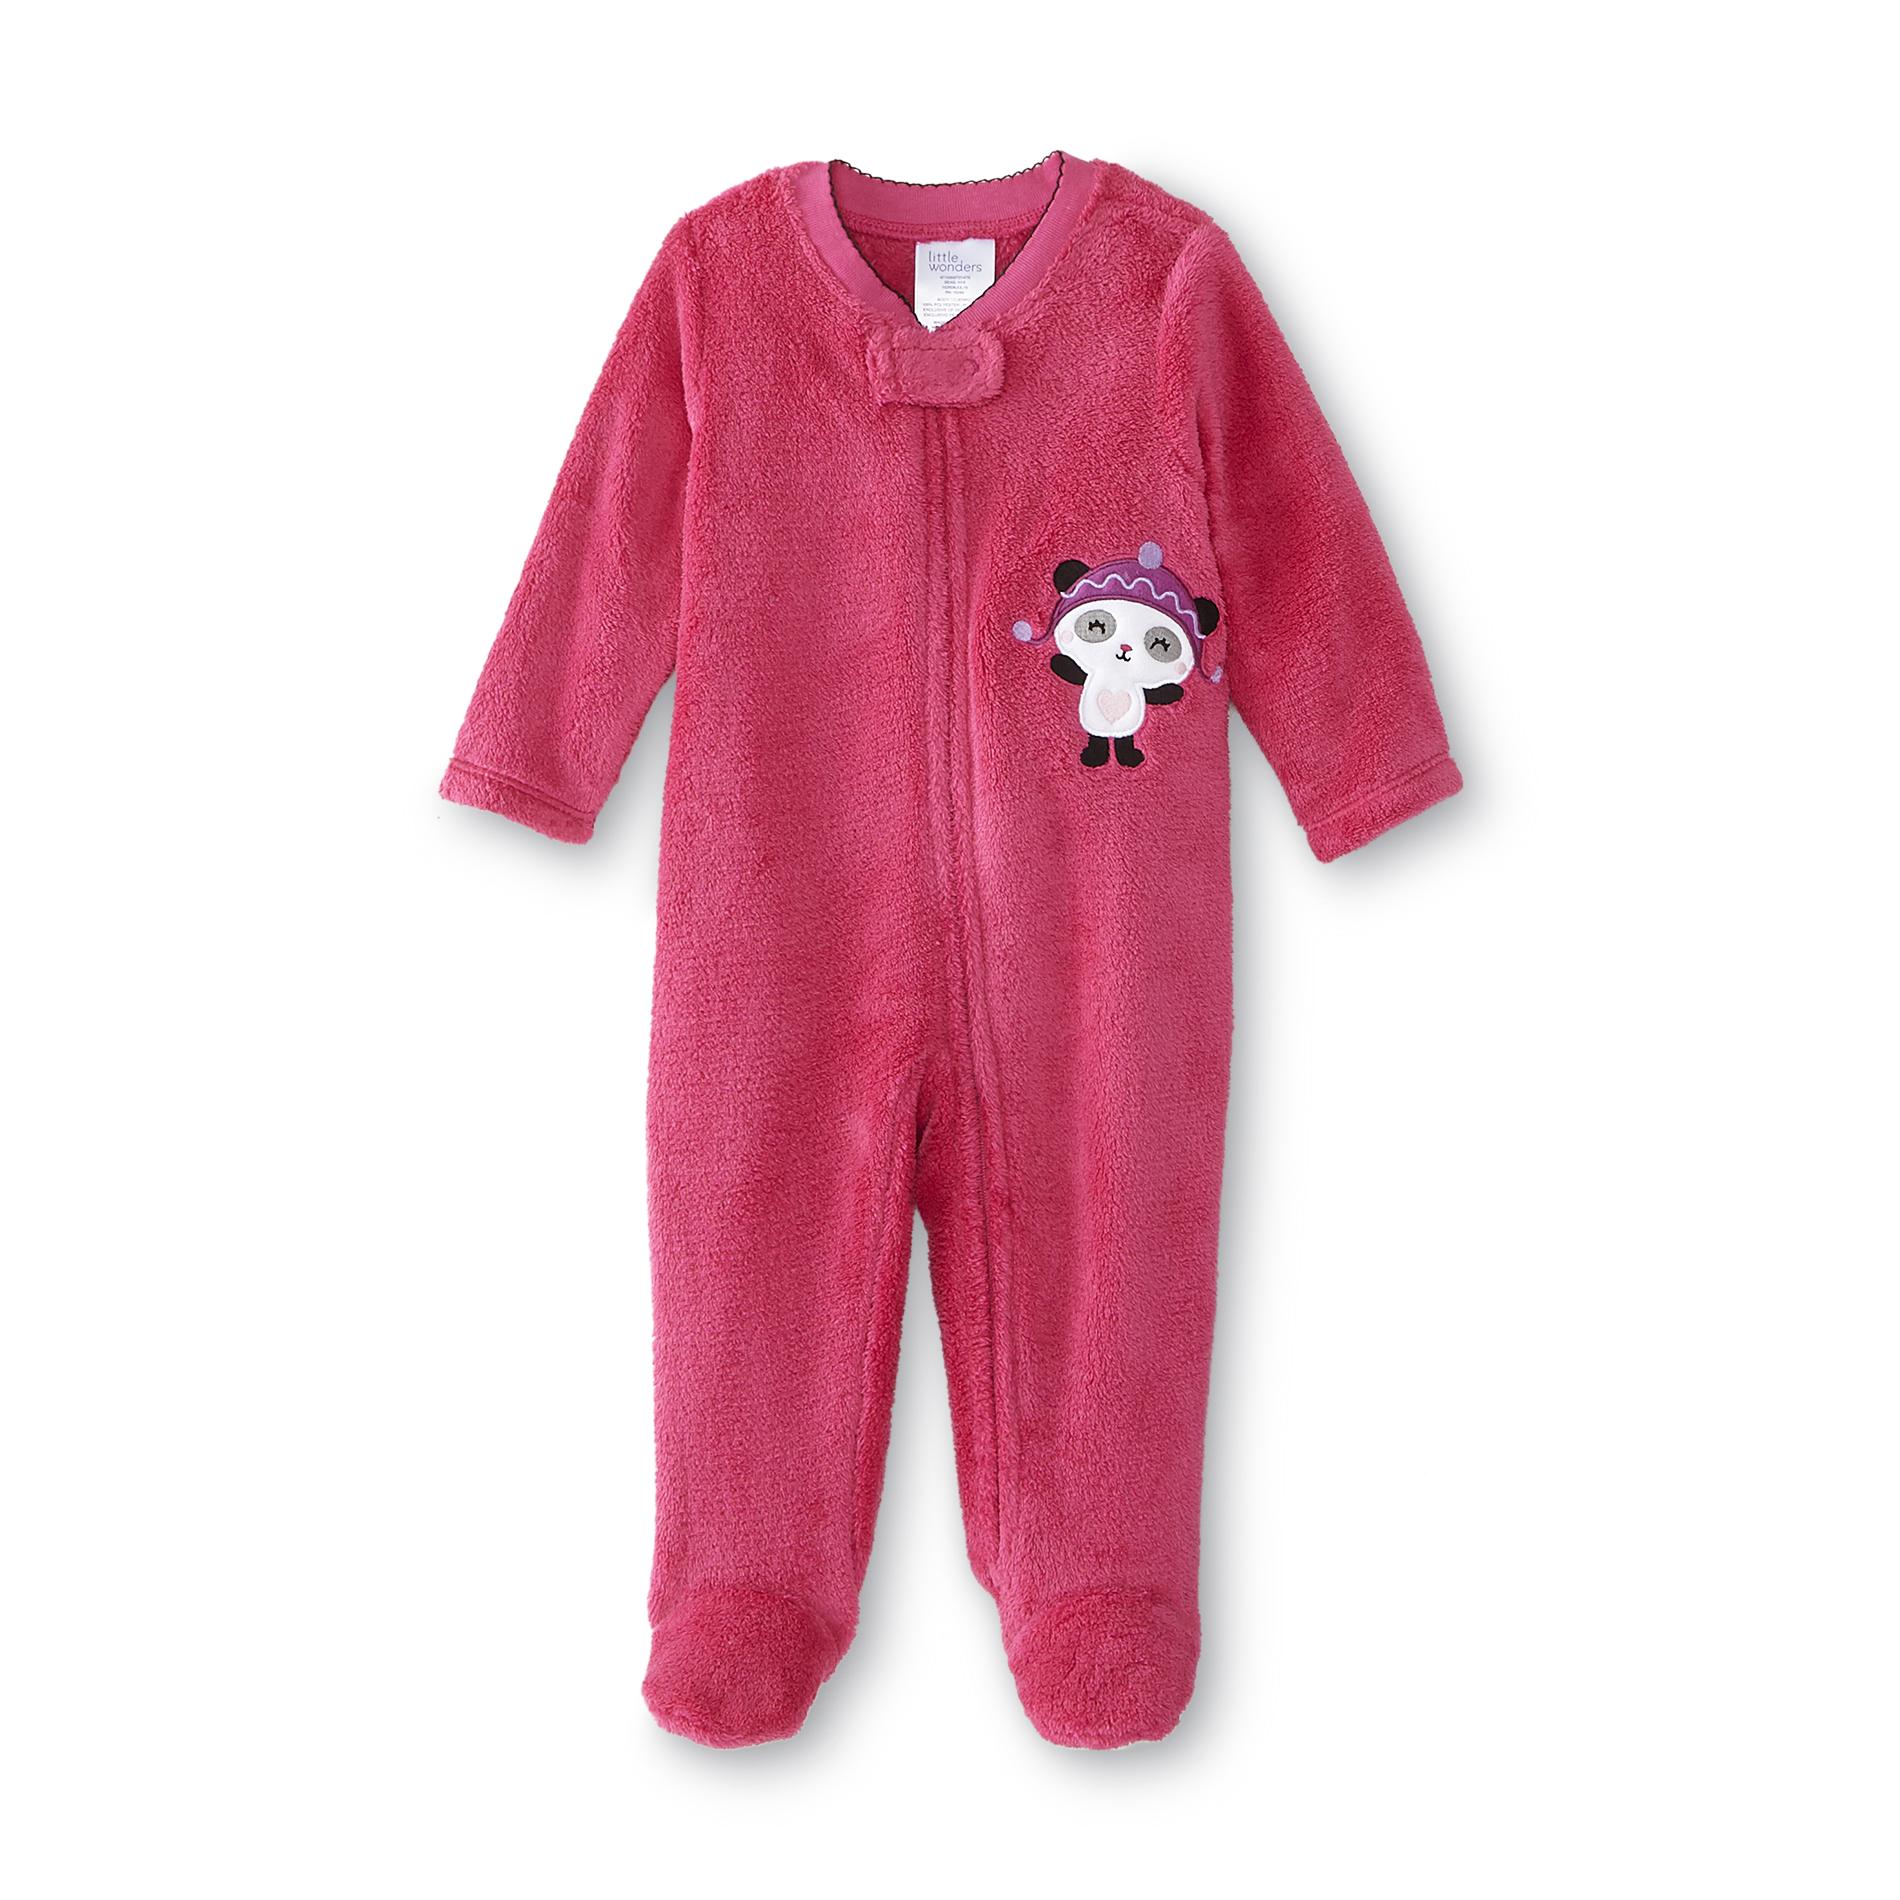 Little Wonders Newborn Girl's Footed Fleece Pajamas - Panda